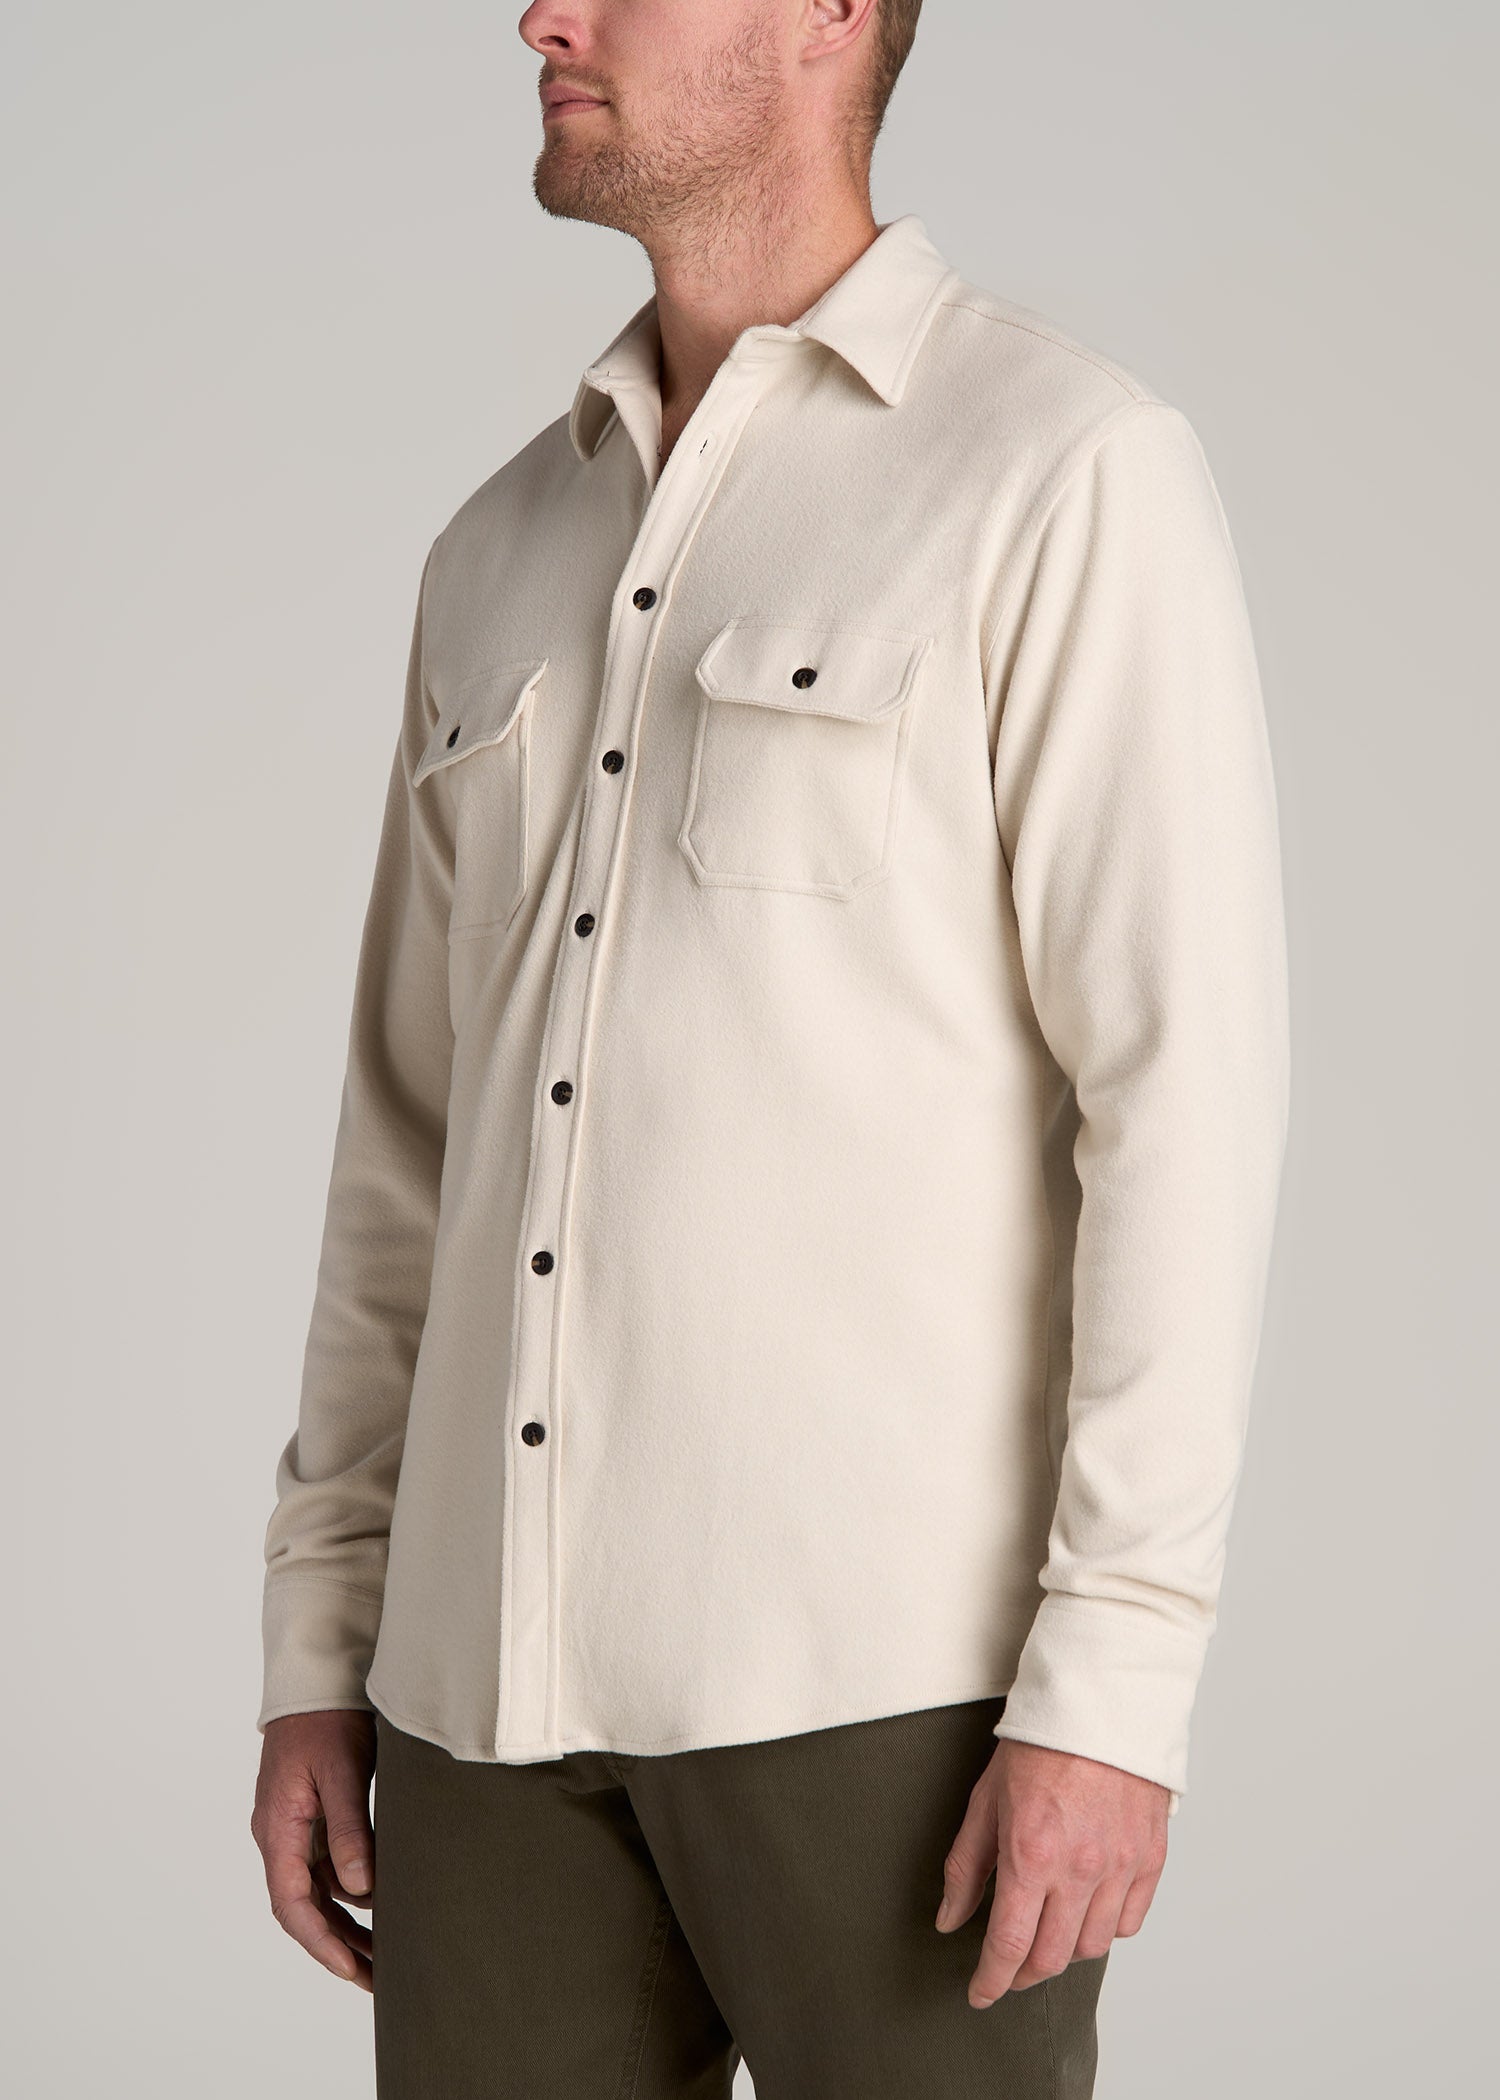 Stretch Flannel Button Tall Men's Shirt